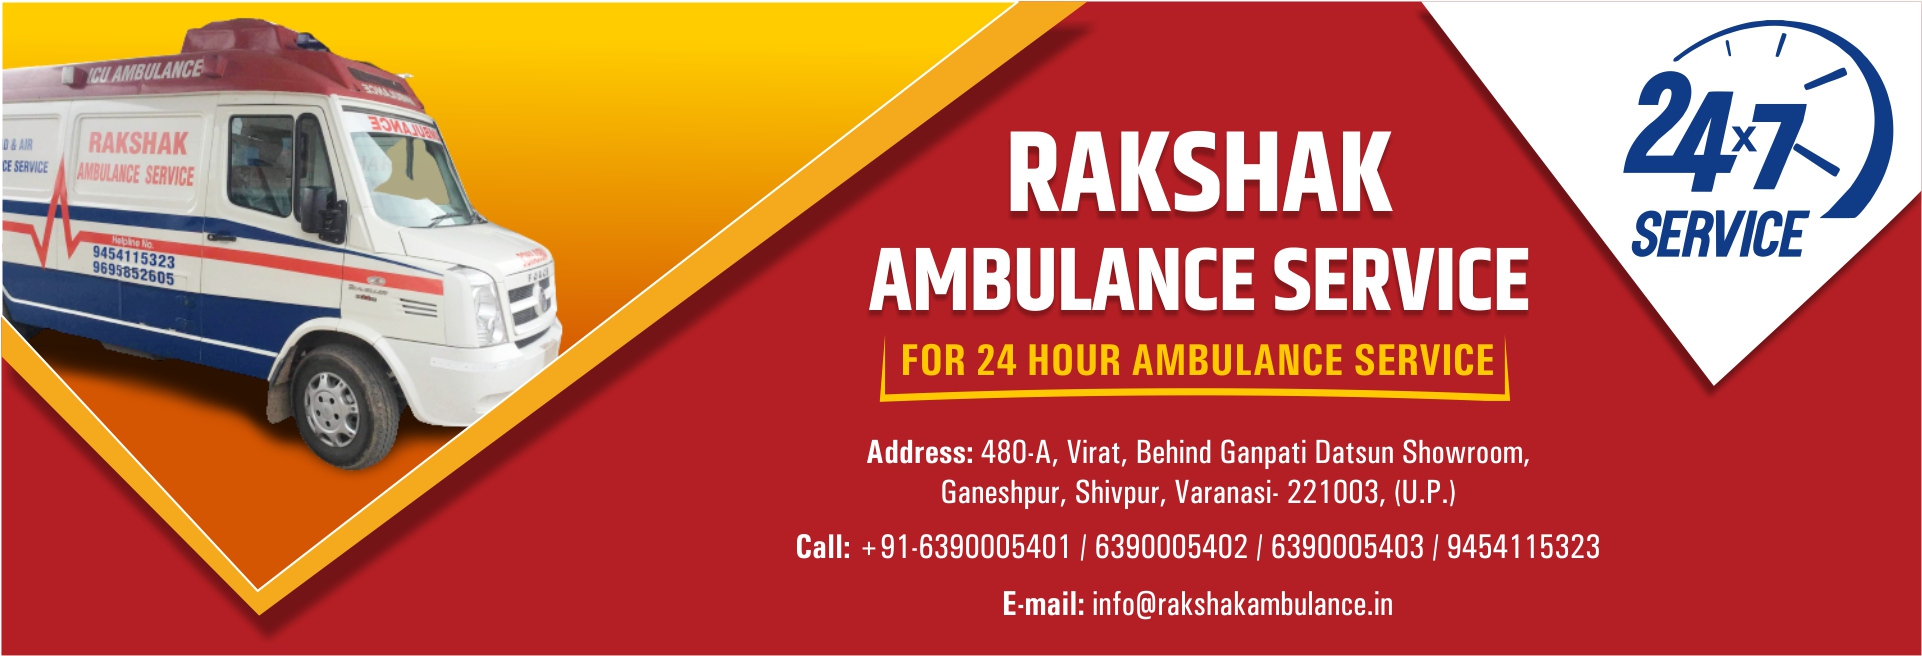 Best Ambulance Service in Varanasi